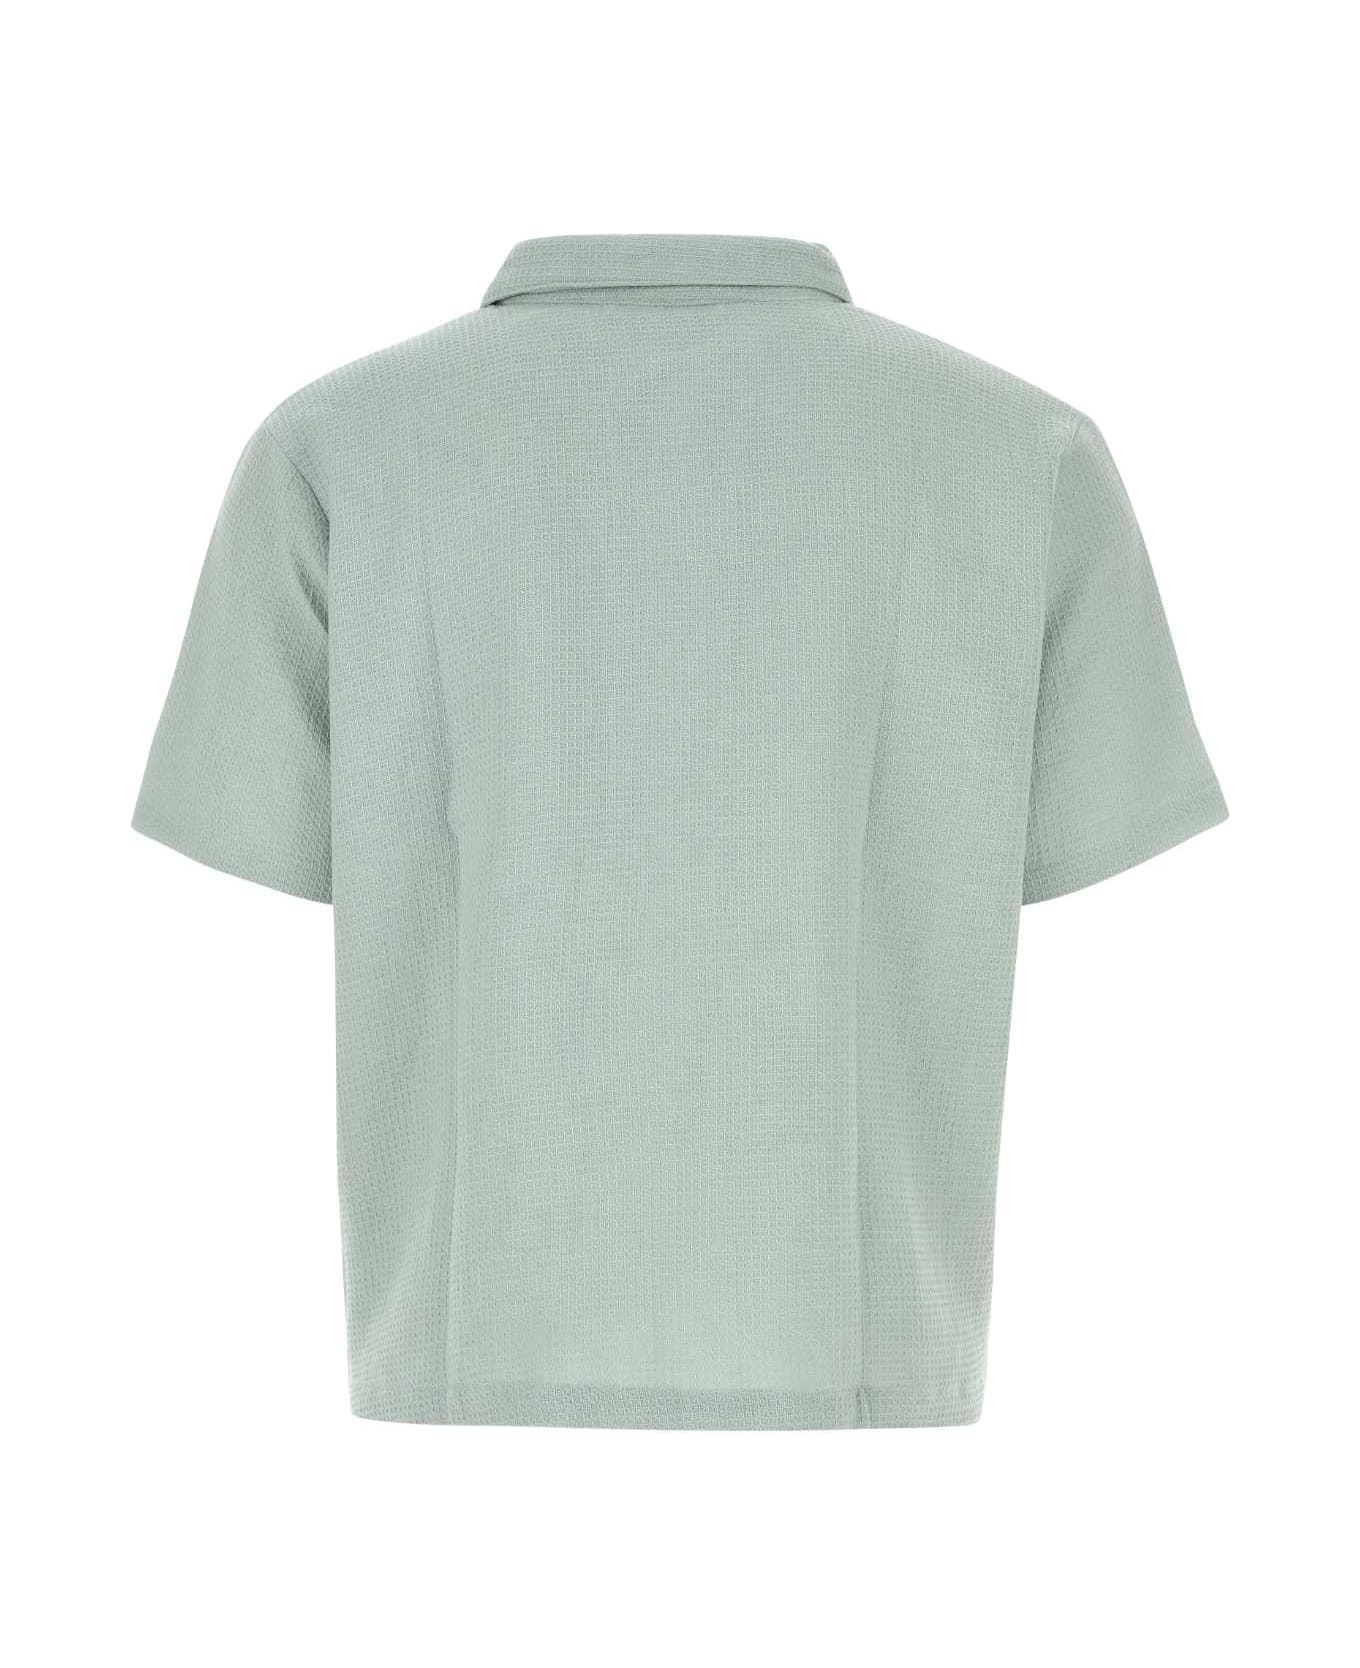 Gimaguas Sage Green Cotton Sunny Shirt - GREYBLACK